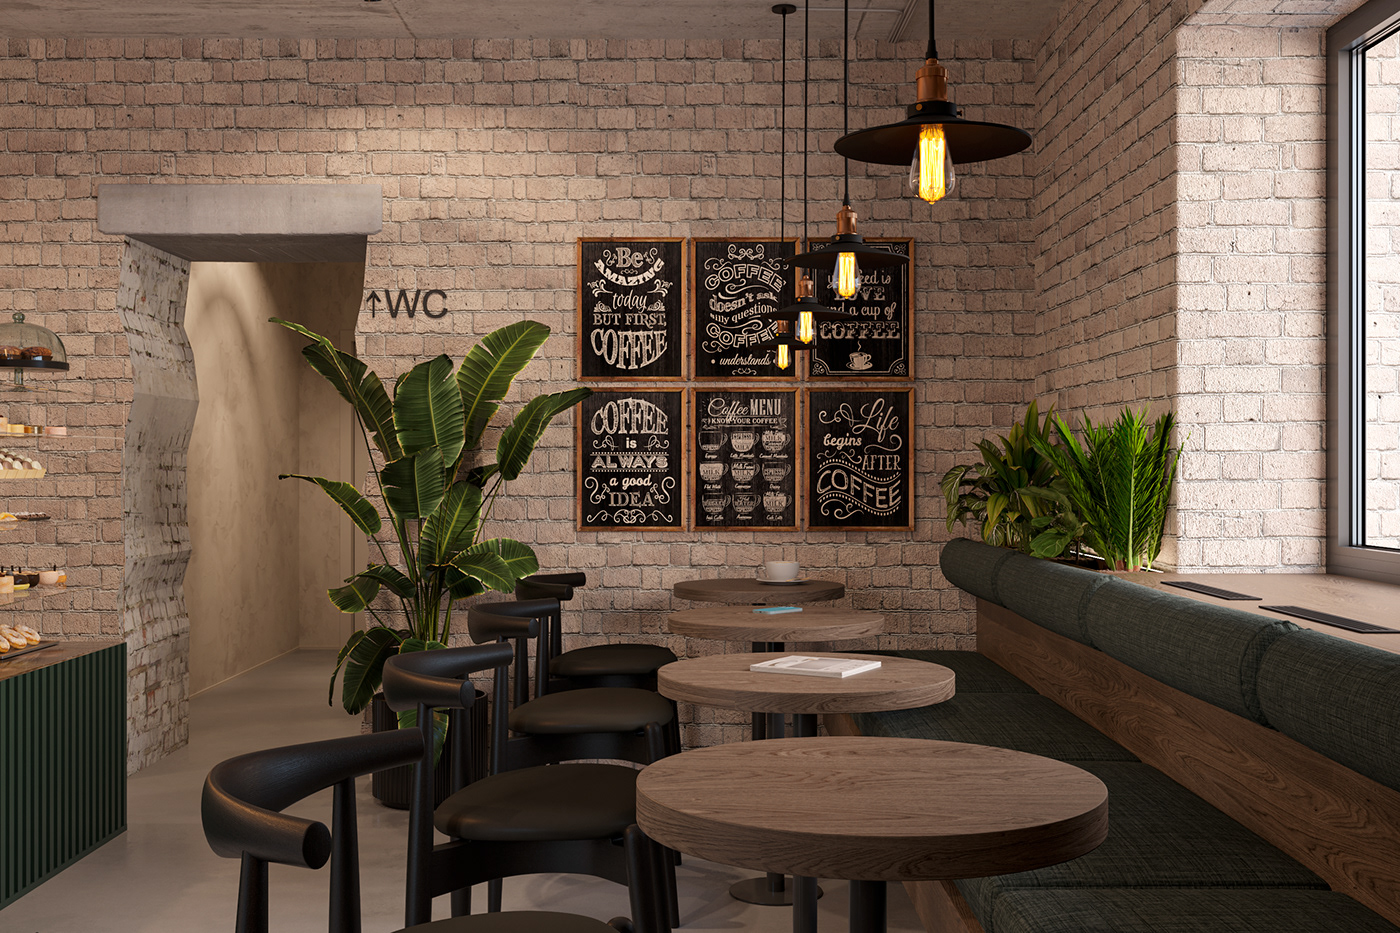 design coffee shop coffe cafe interior design  Interior Render CafeCoffeeDay coffebar publicplace